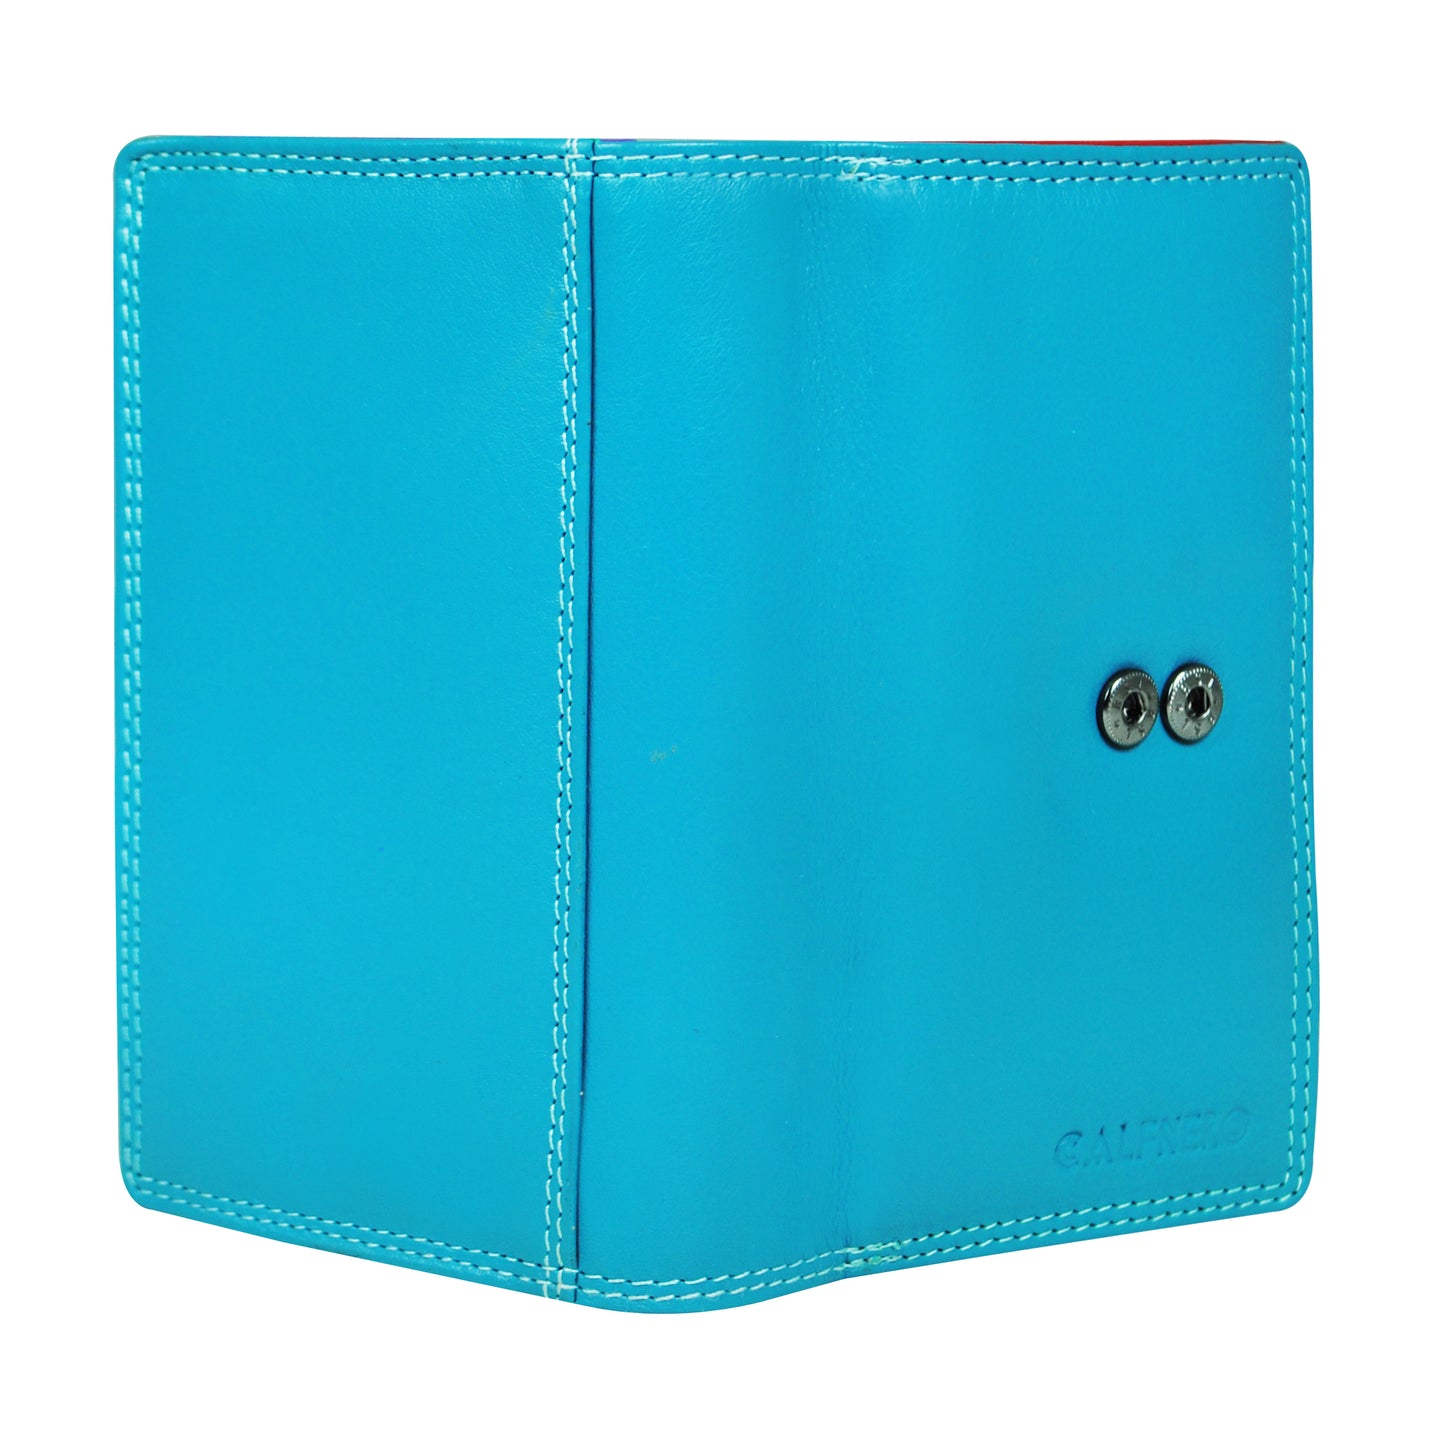 Calfnero Genuine Leather Women's Wallet (6080-Green-Multi)